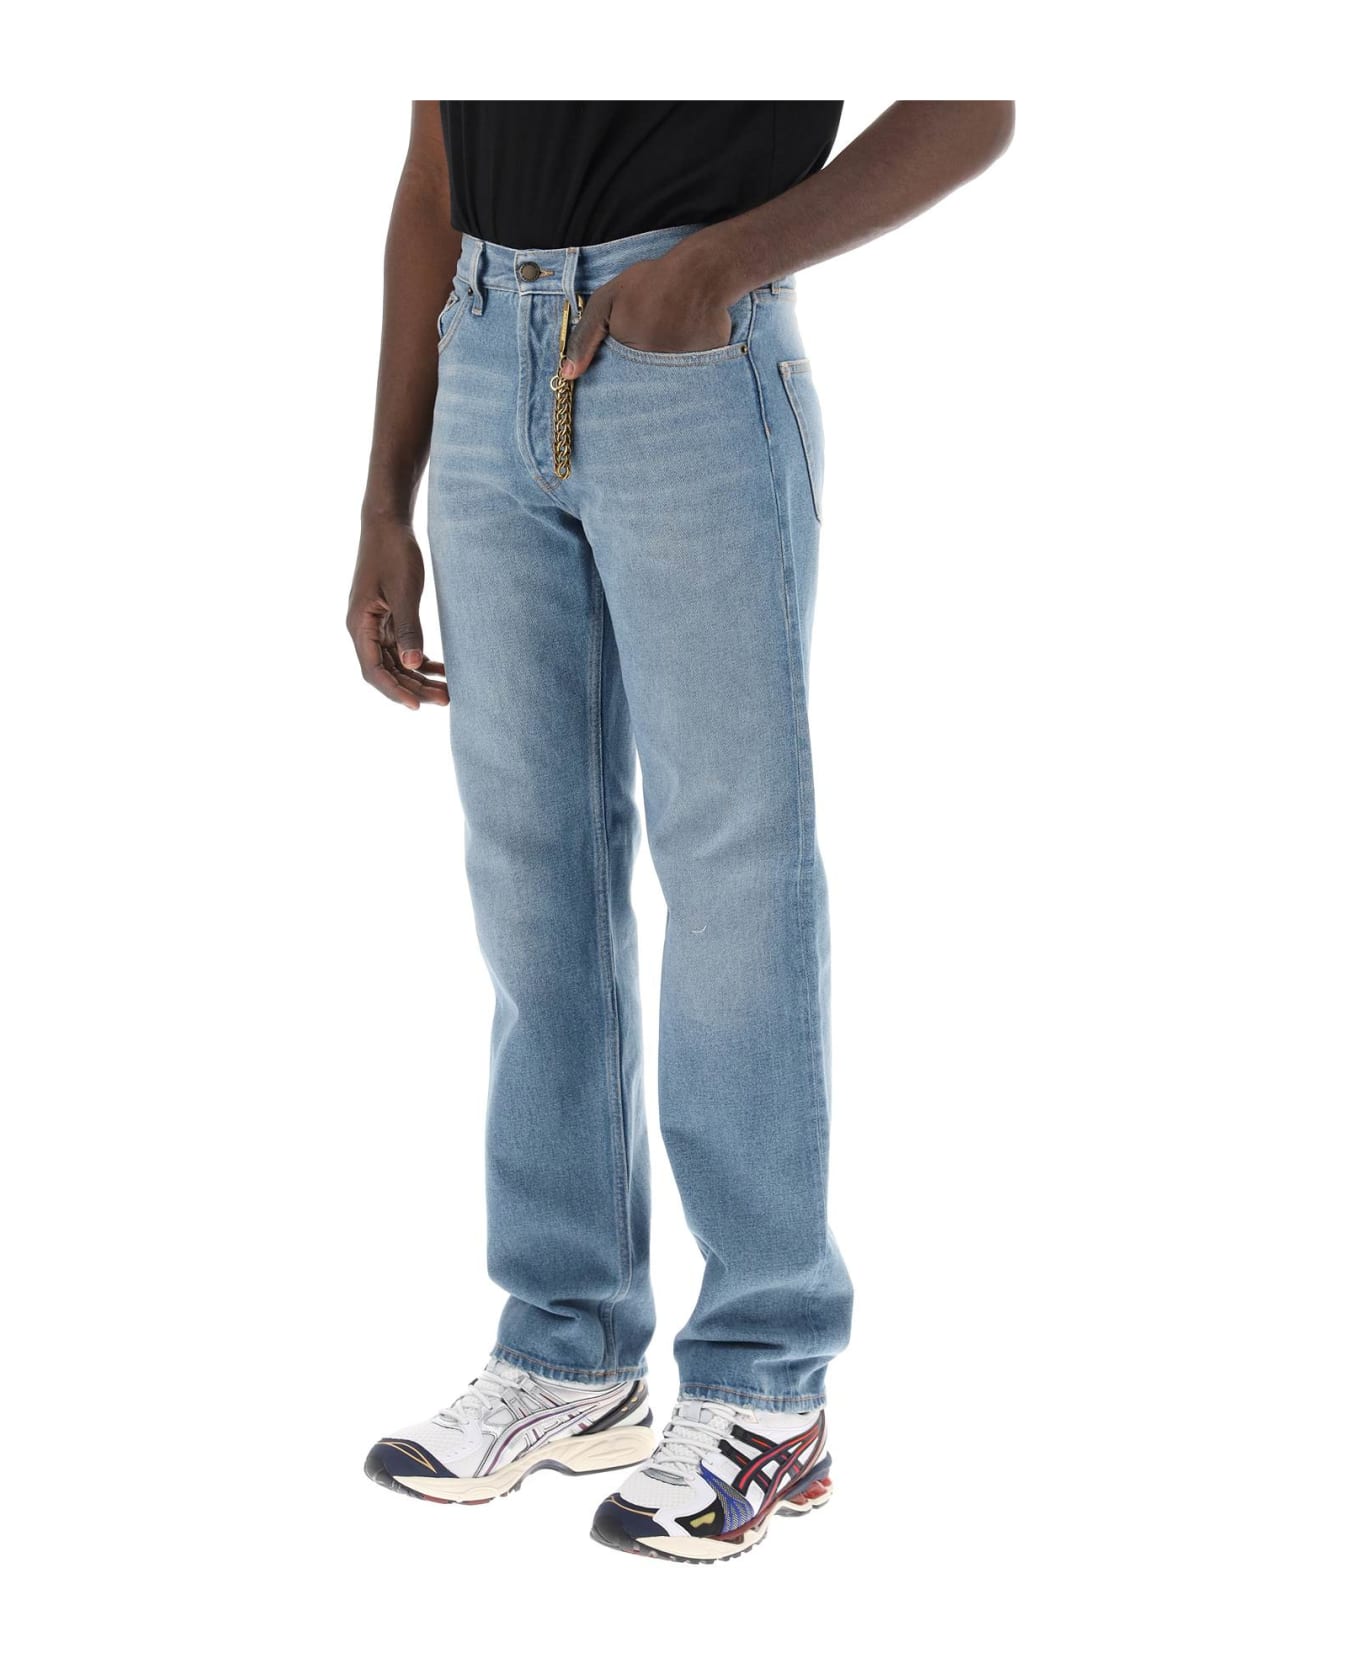 DARKPARK Larry Straight Cut Jeans - Full Blue